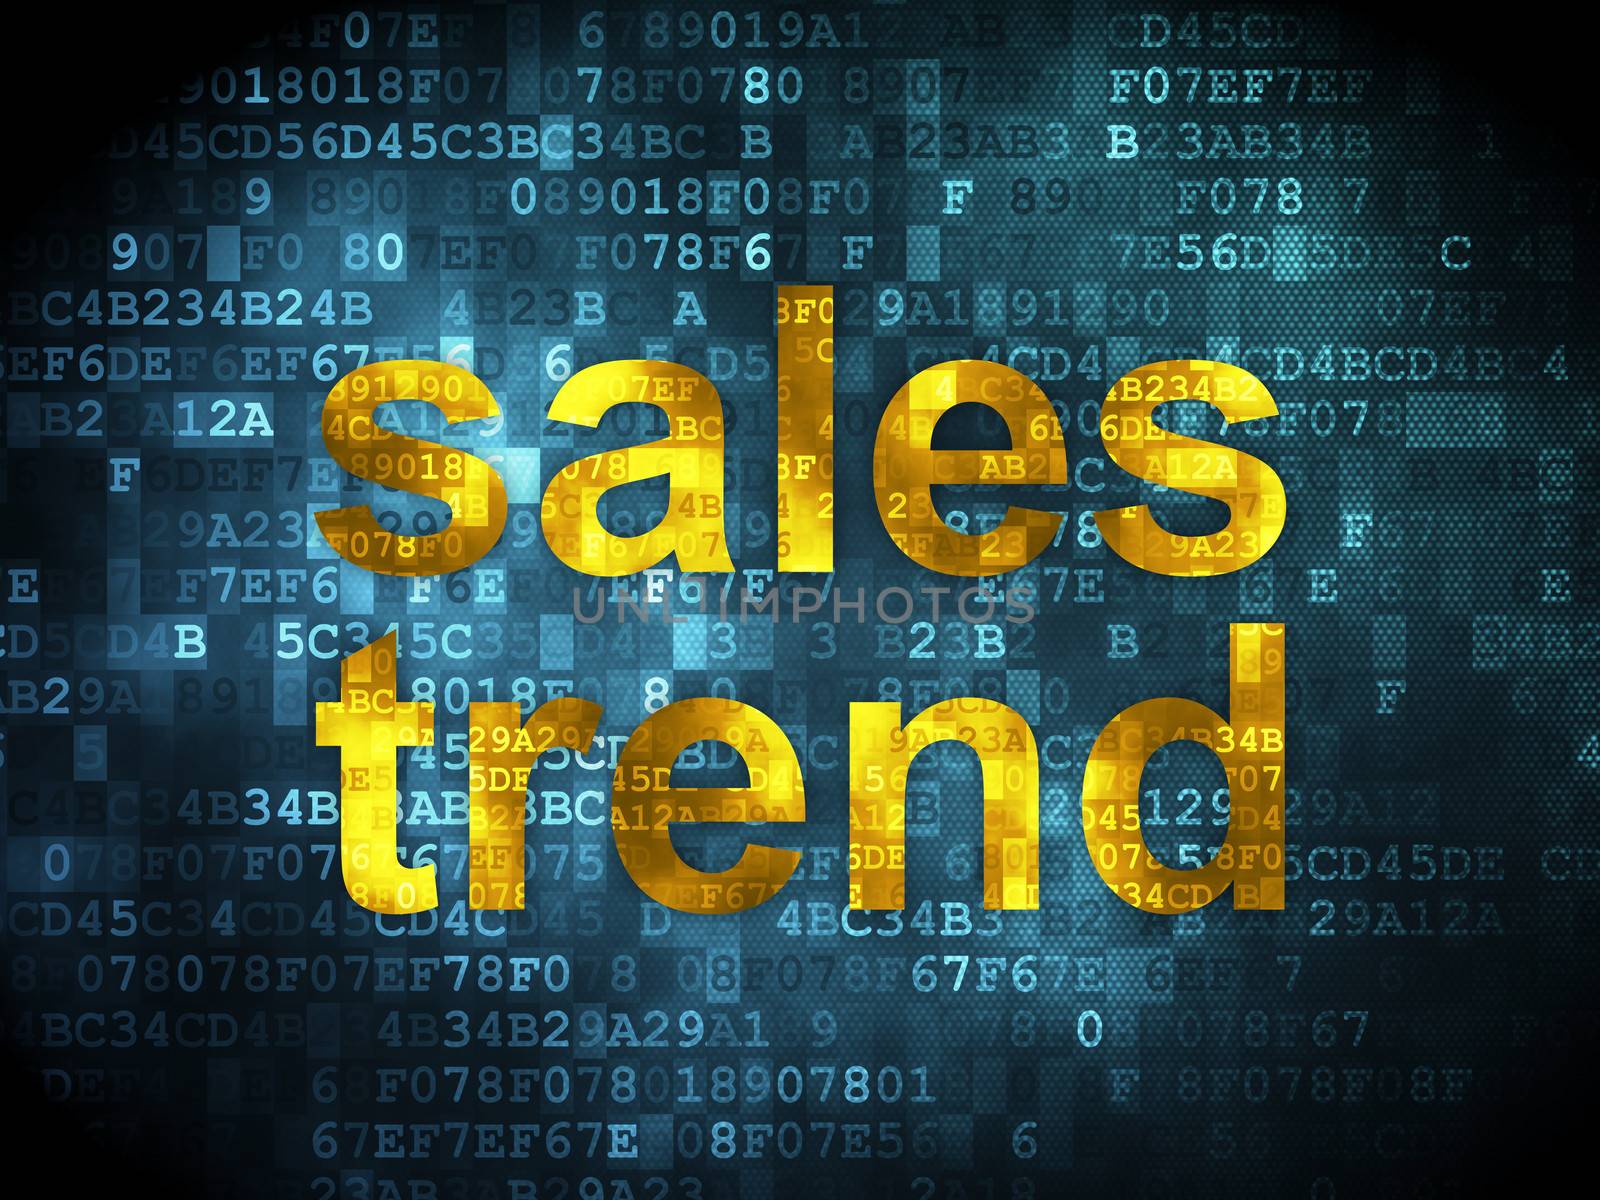 Marketing concept: pixelated words Sales Trend on digital background, 3d render